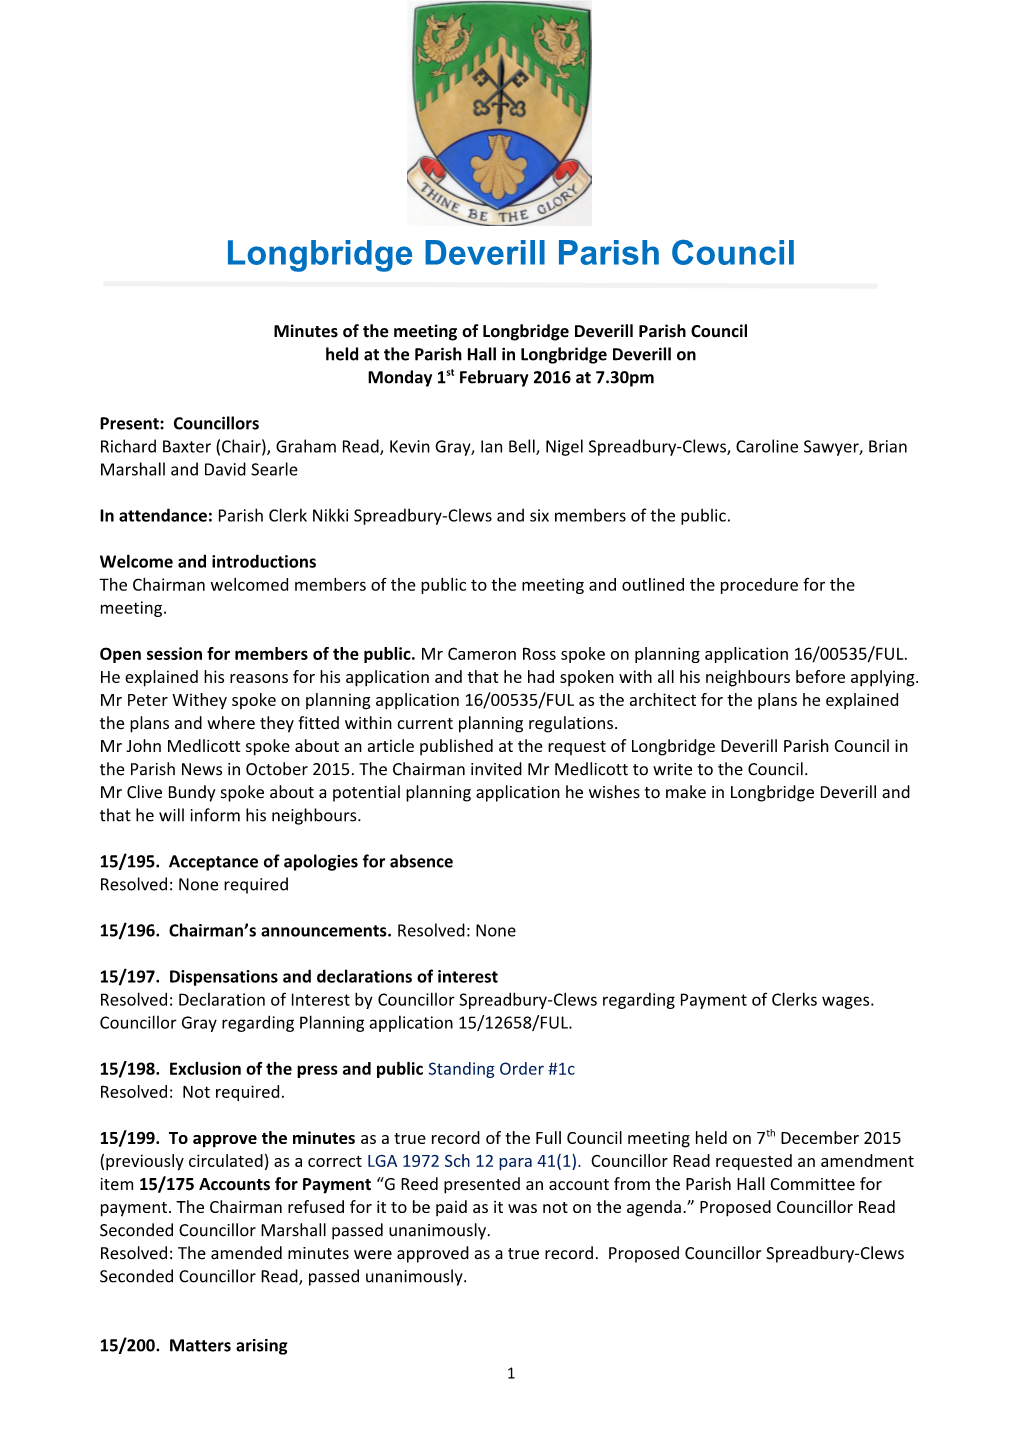 Minutes of the Meeting of Longbridge Deverill Parish Council